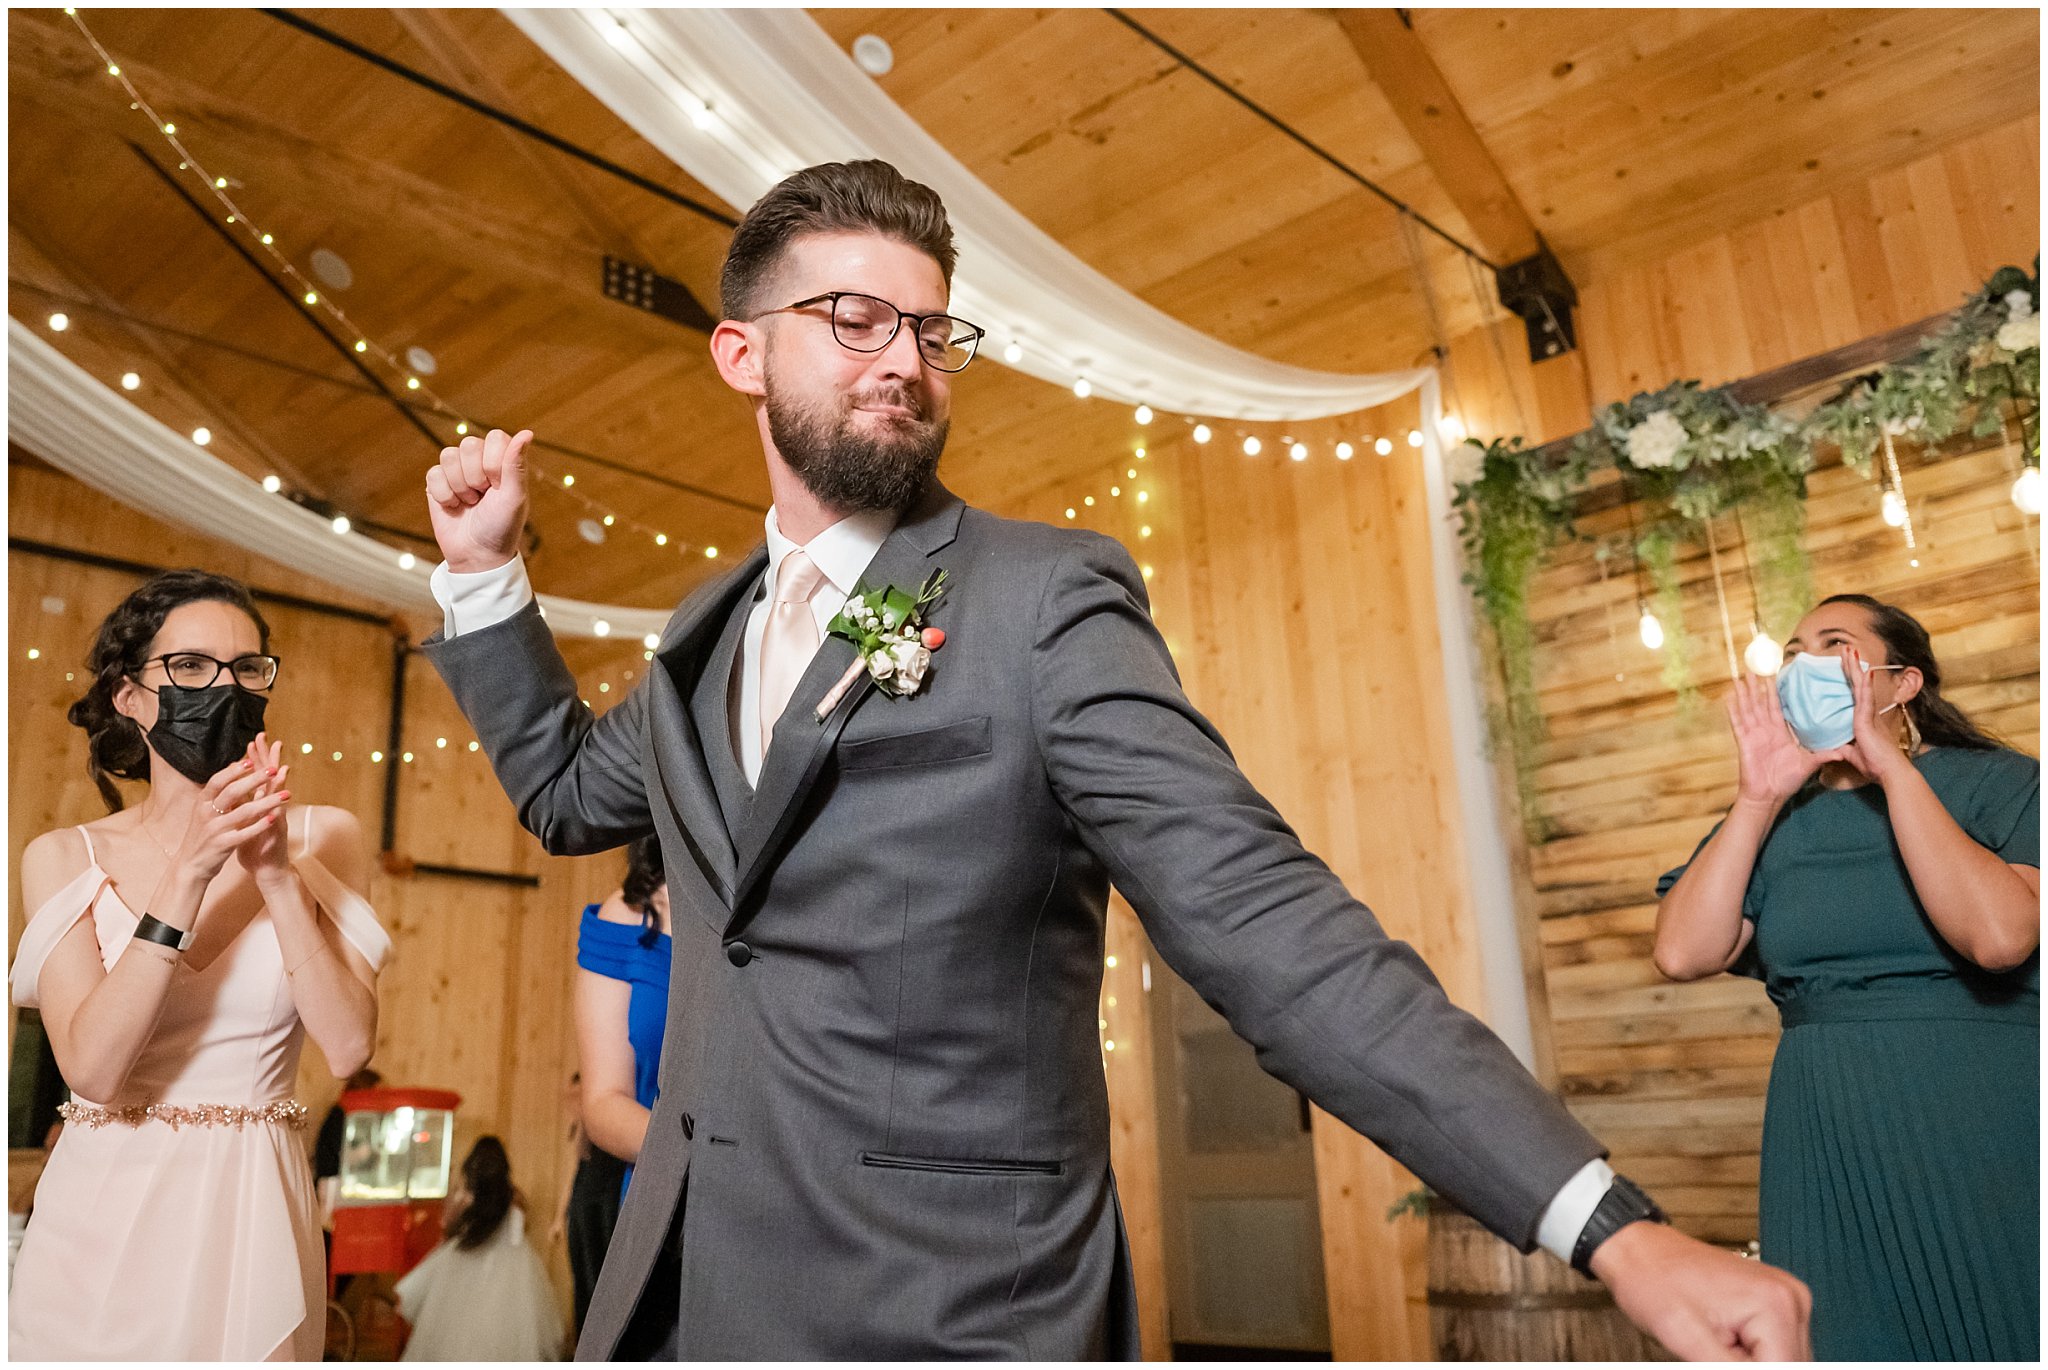 Dancing during wedding | Rustic Mountain Destination Wedding at Oak Hills Utah | Jessie and Dallin Photography